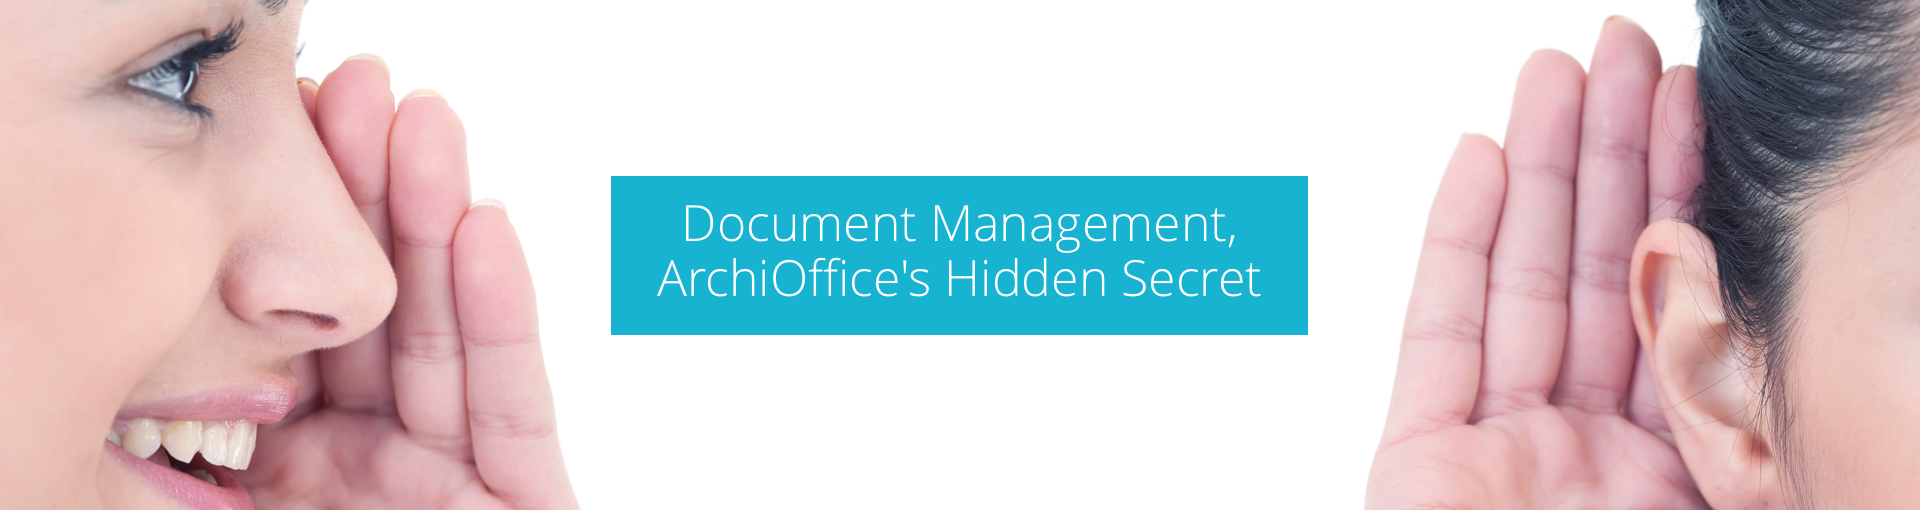 Document Management, ArchiOffice's Hidden Secret Featured Image